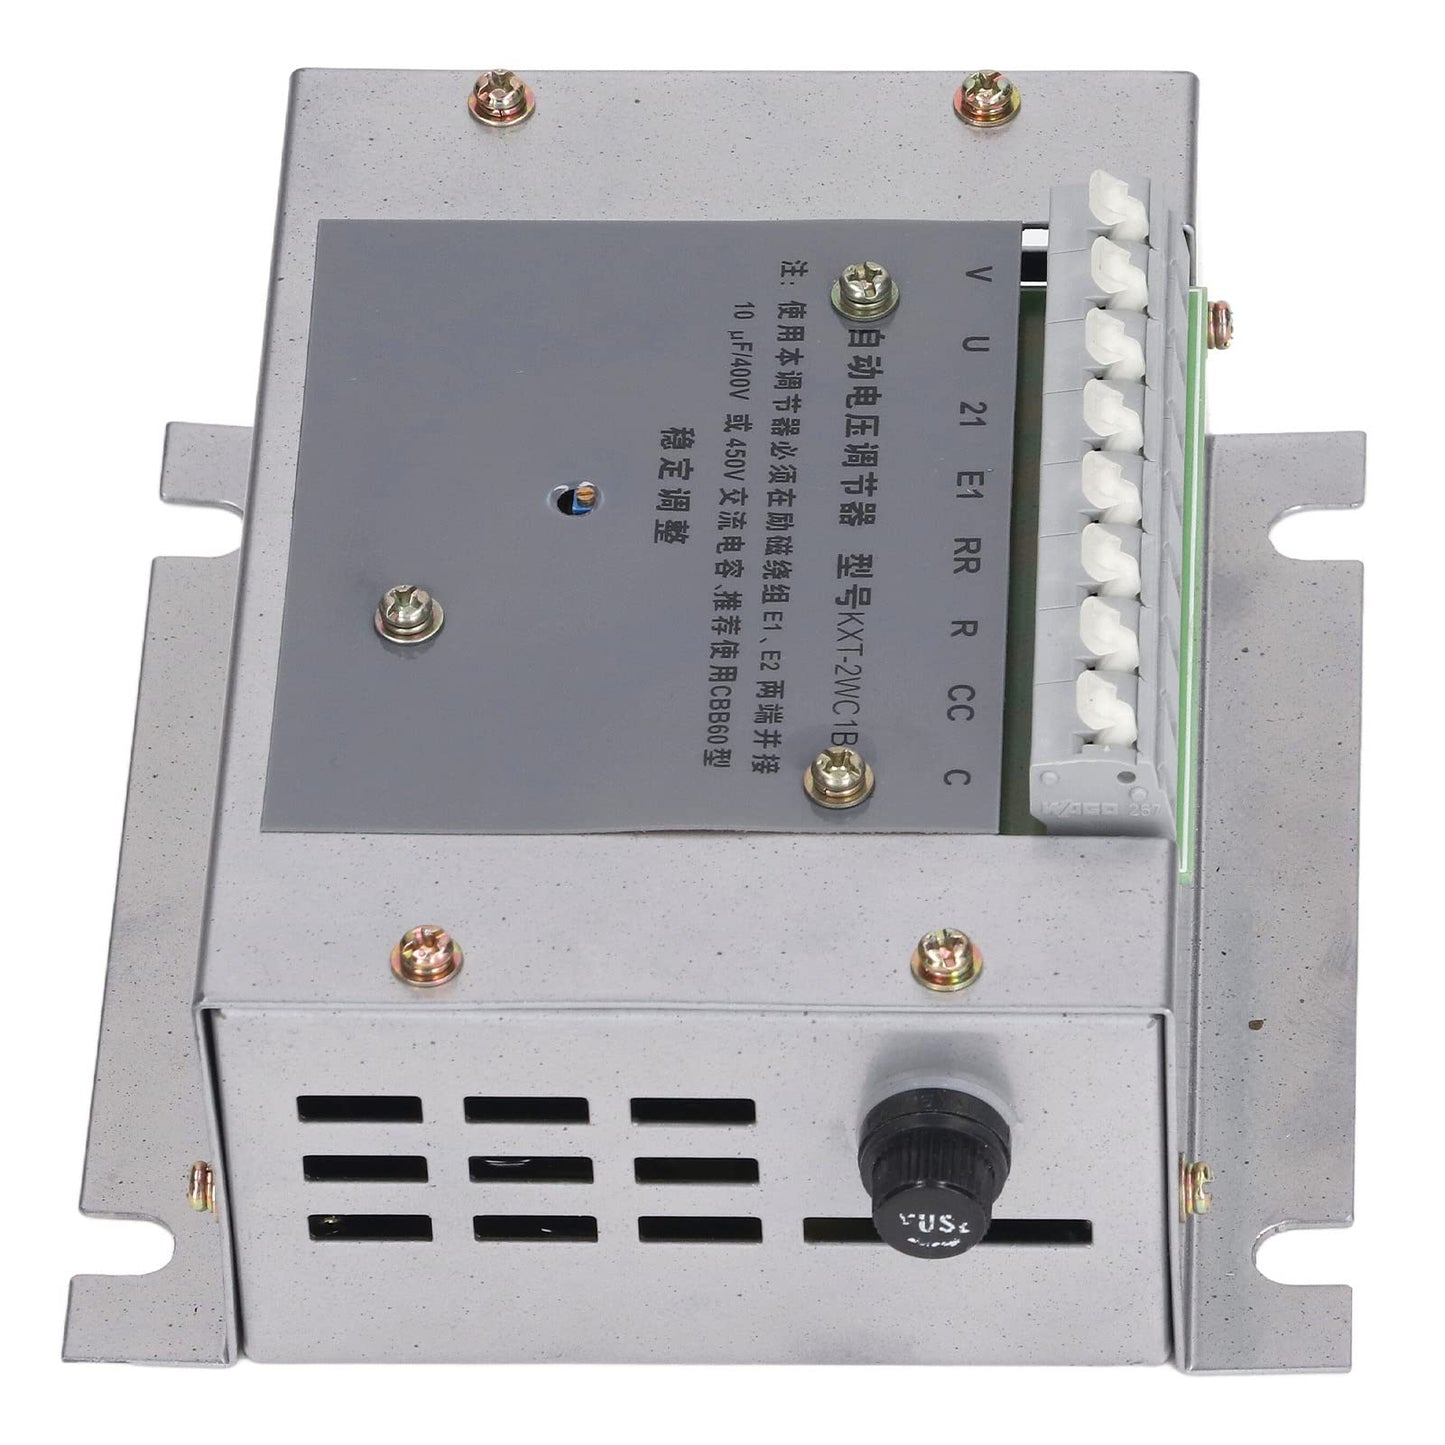 Excitation Voltage Regulator, Excitation Voltage Stabilizer Stable 400v Professional For Ac Synchronous Generator